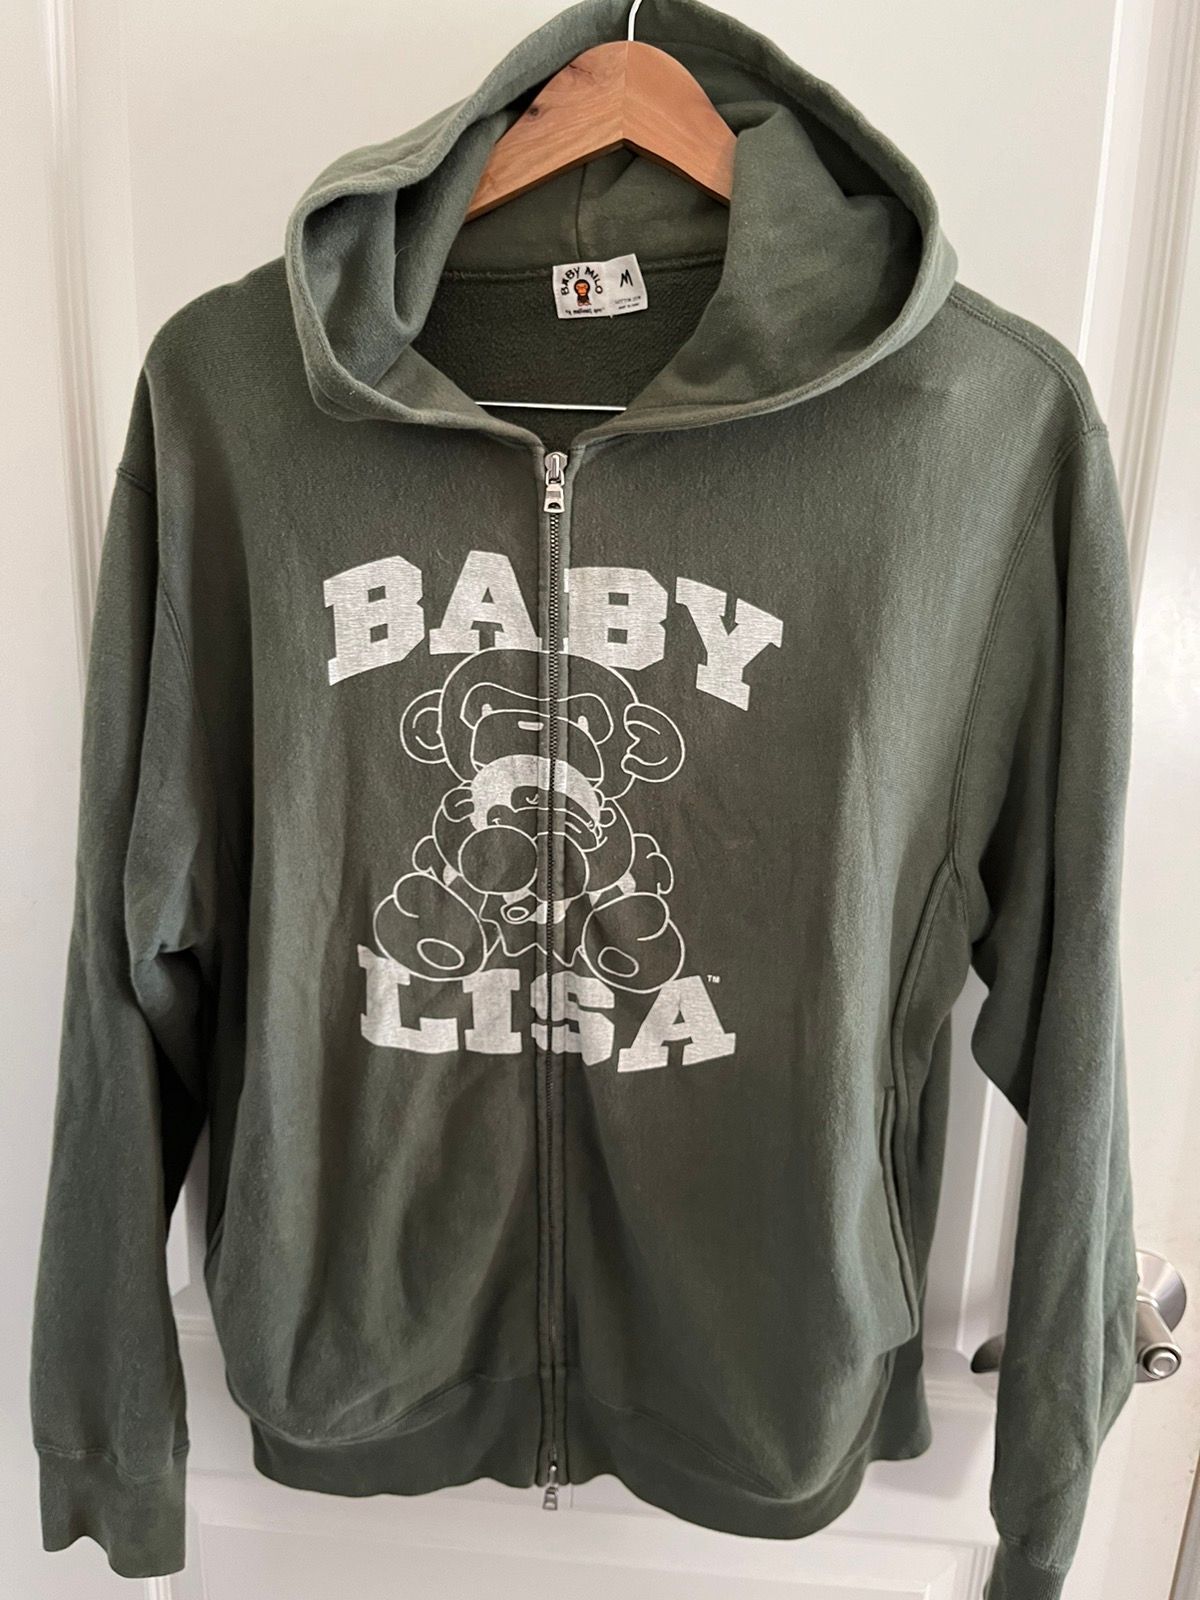 Bape Baby Lisa Hoodie in Null, Men's (Size Medium) Product Image